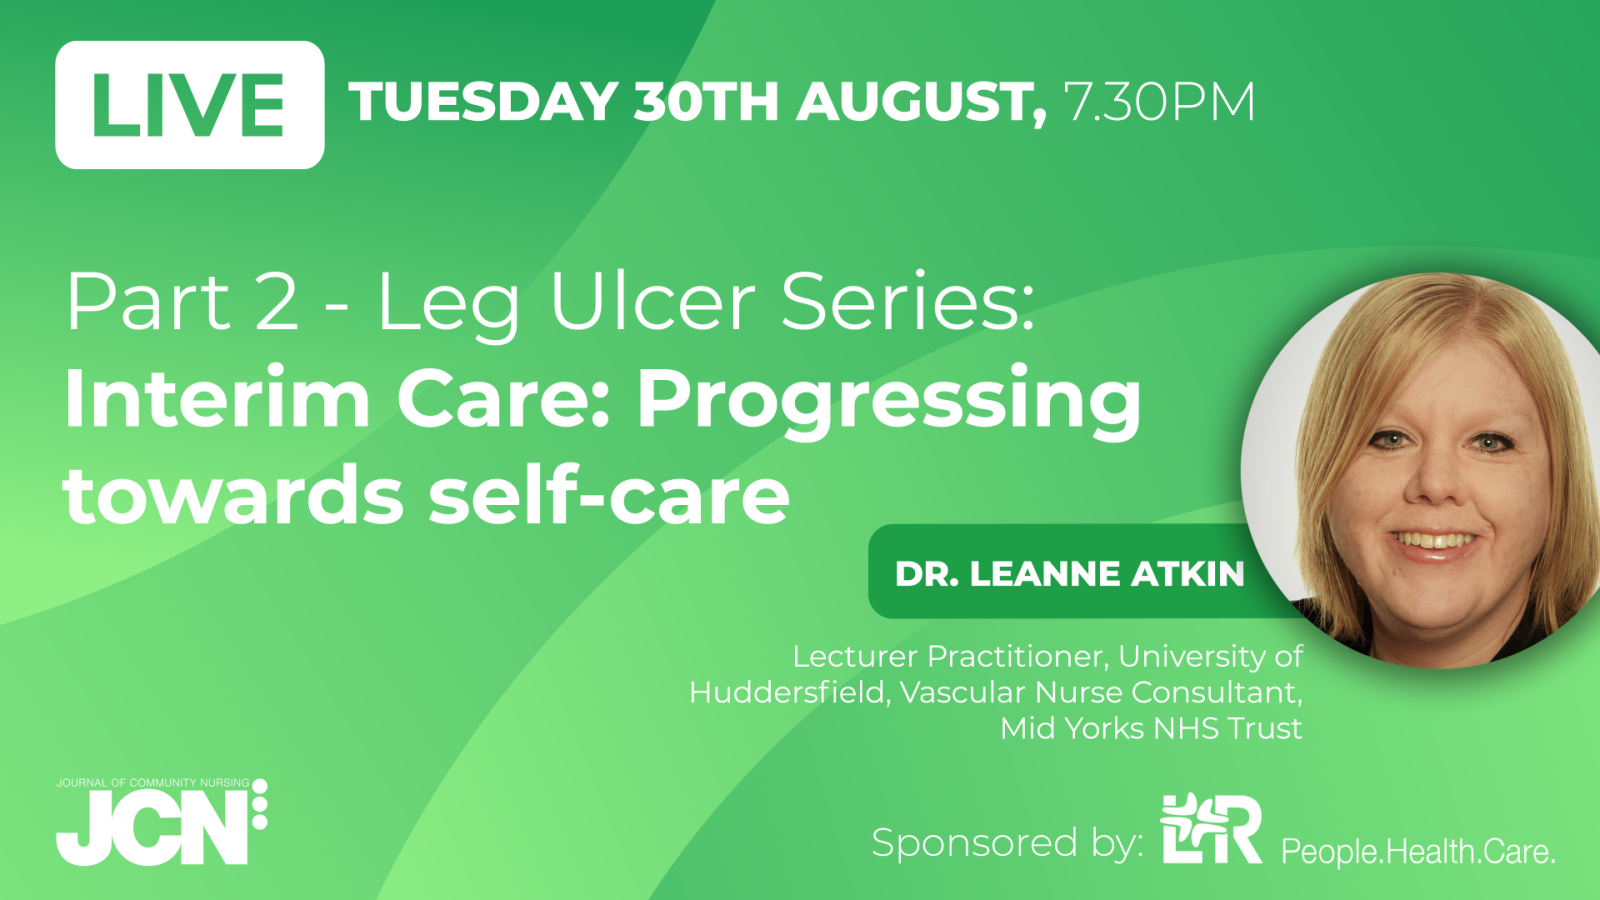 Facebook Live: Part 2 - Leg Ulcer Series: Interim Care - Progressing towards self-care